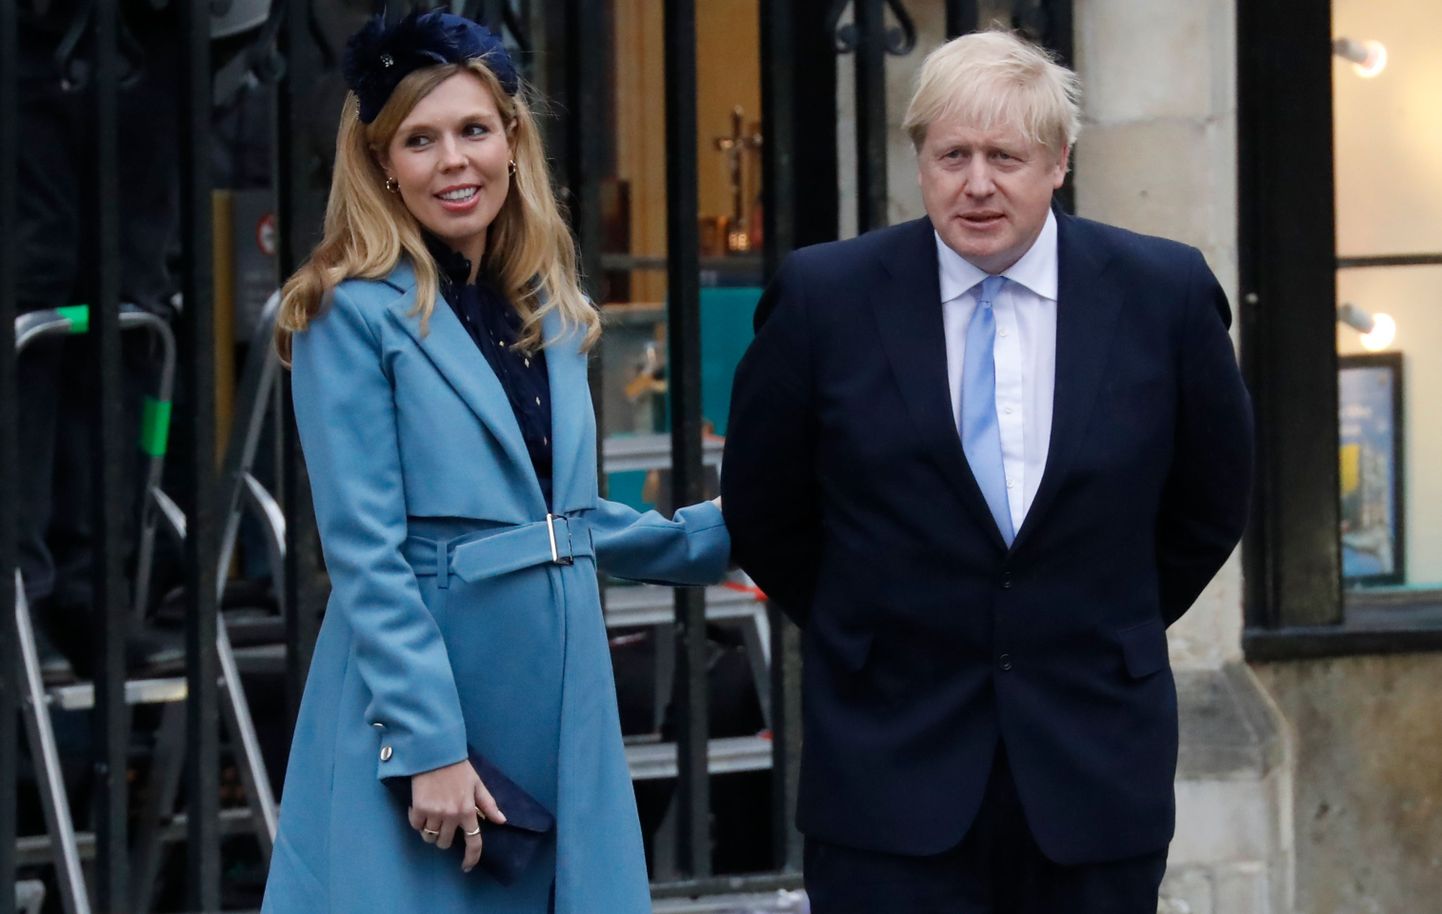 Briti peaminister Boris Johnson ja ta kihlatu Carrie Symonds märtsis 2020. Symonds sünnitas 29. aprillil poja